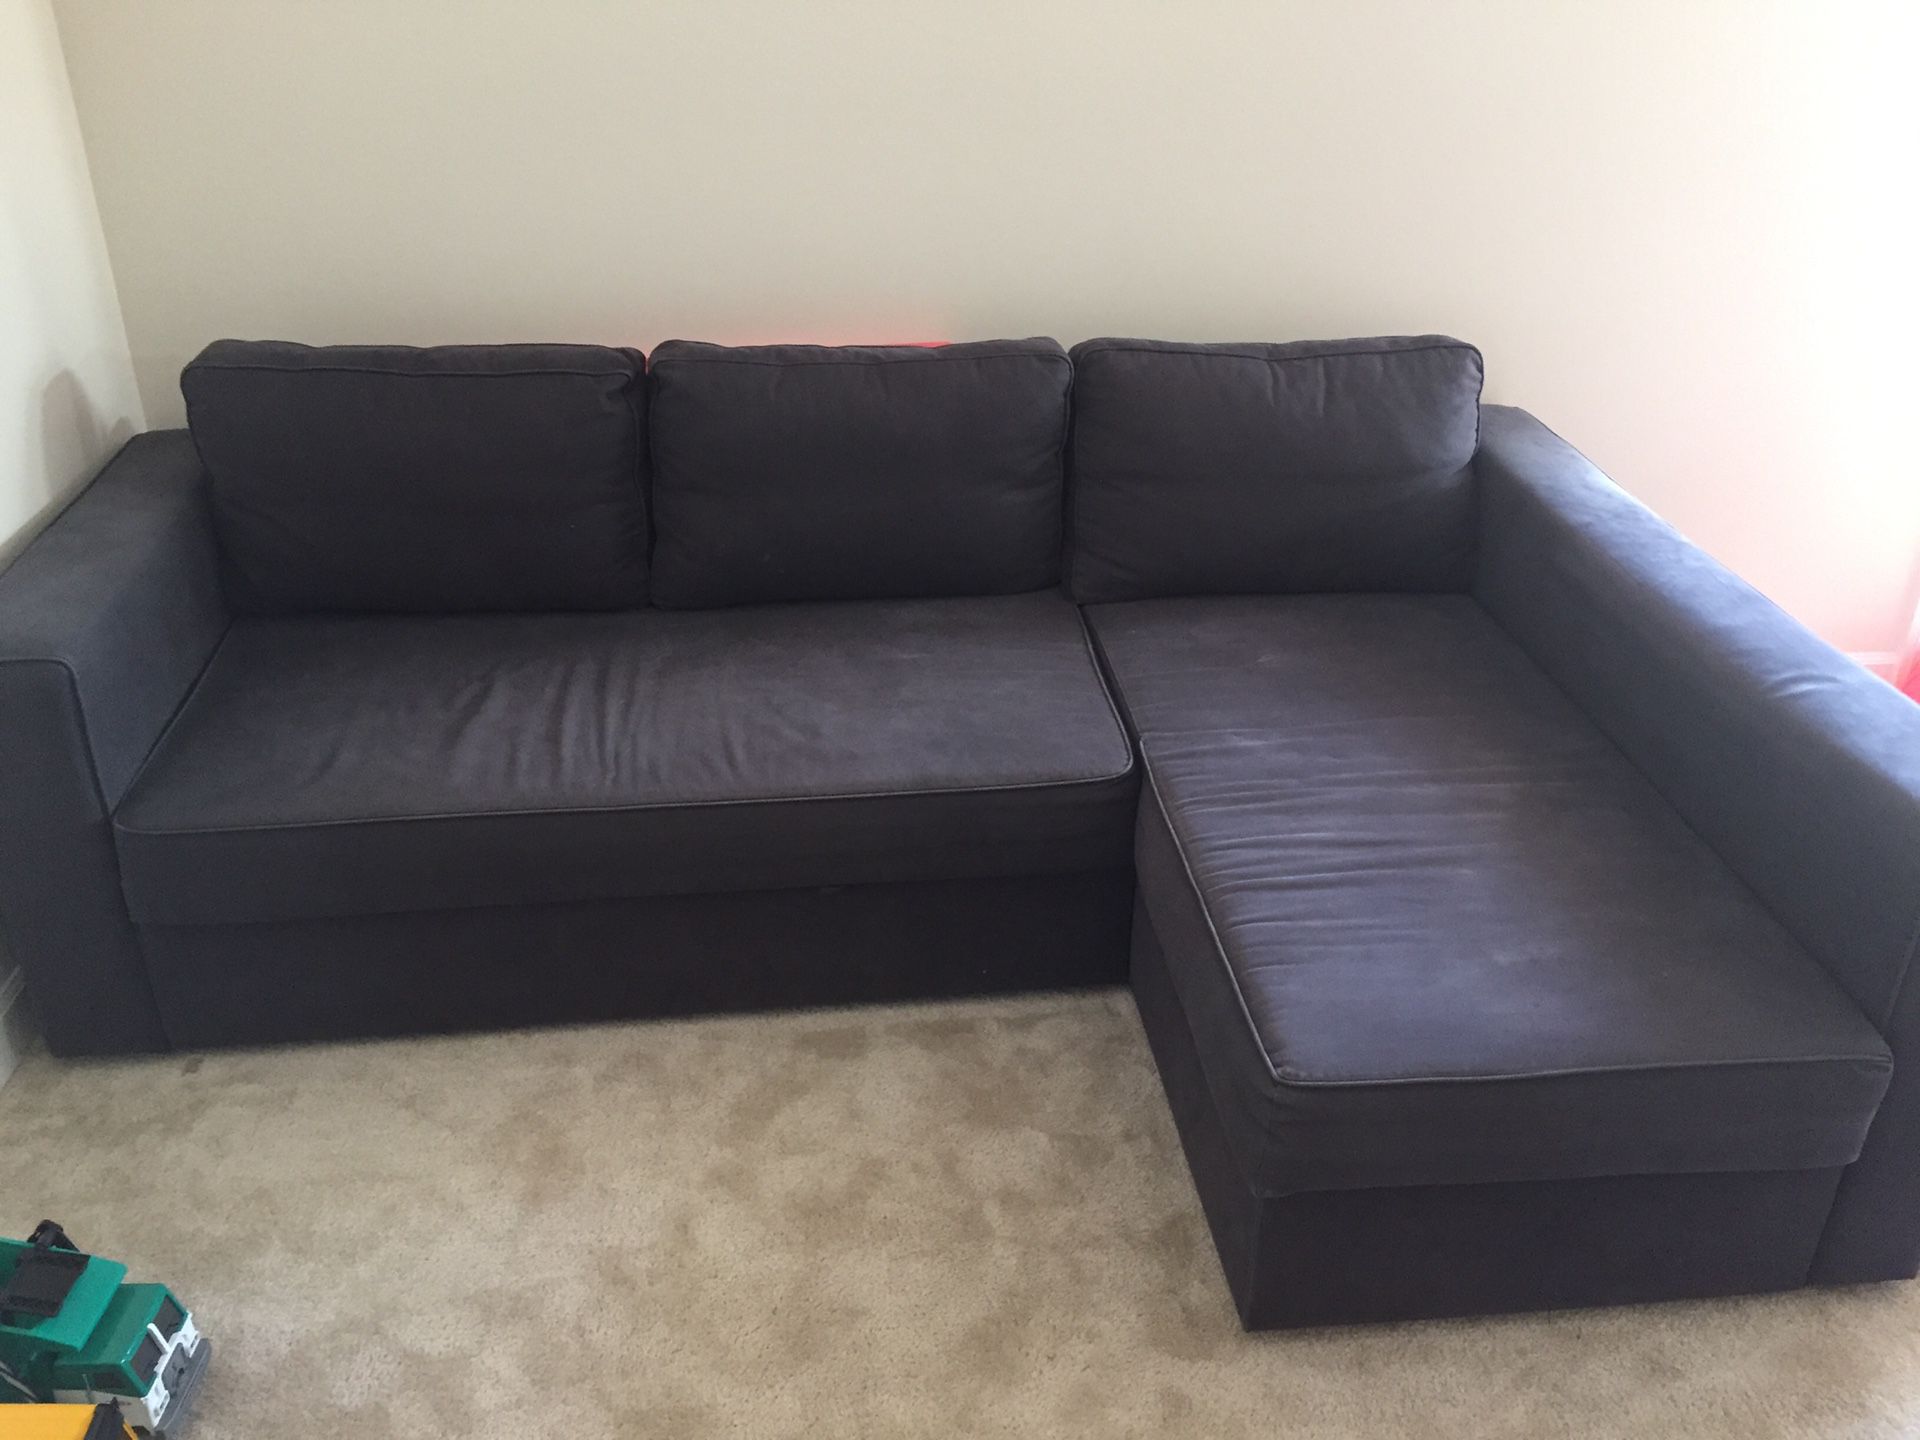 Sleeper sofa with an extra storage